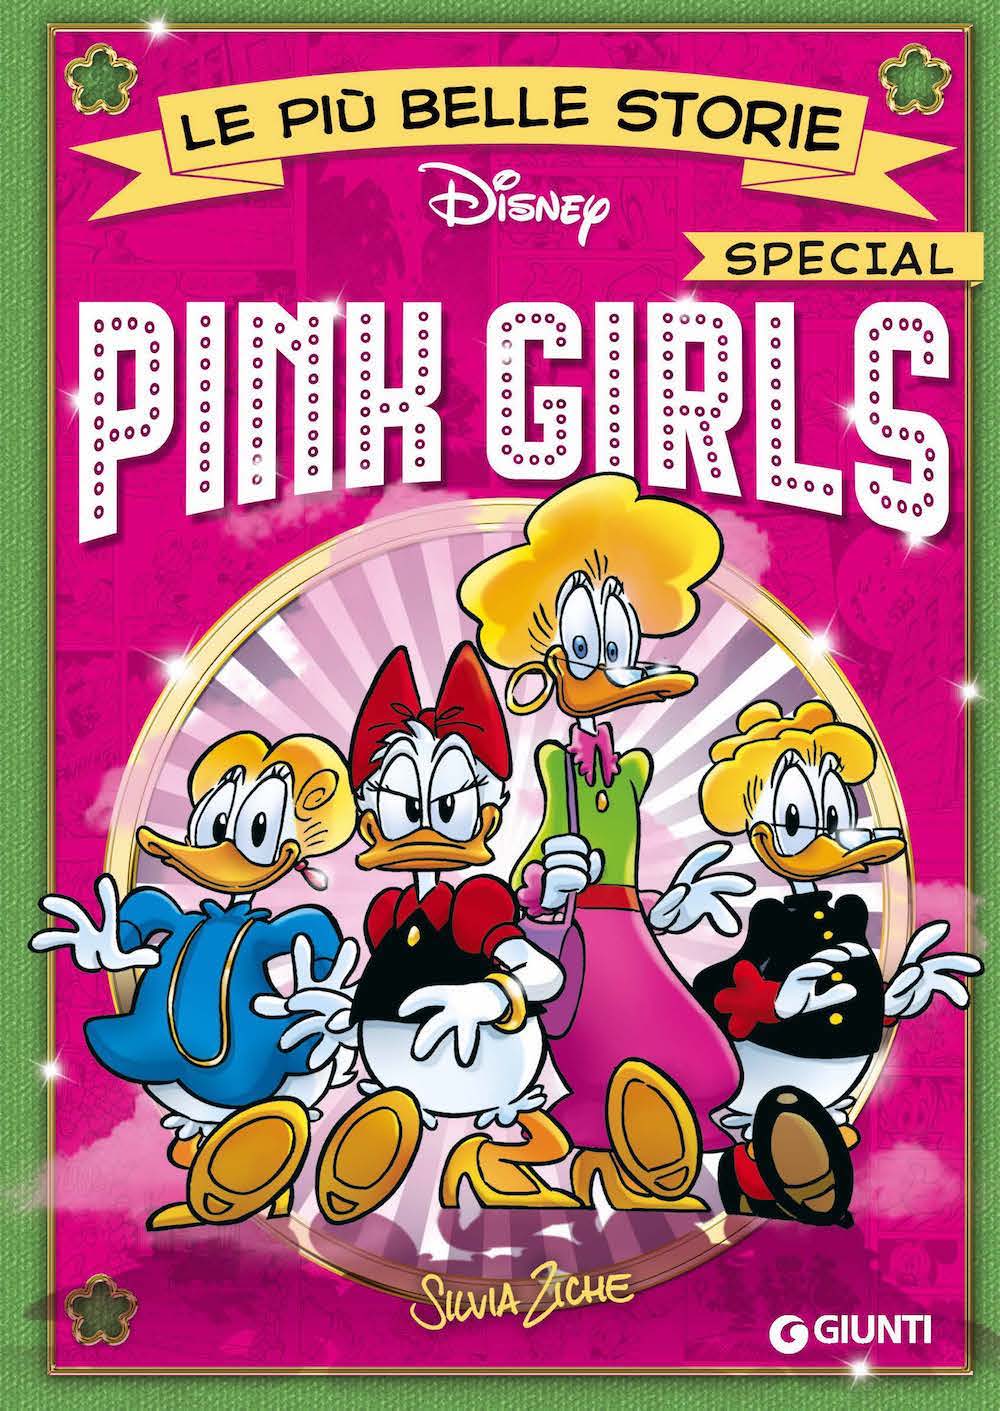 Le più belle storie special edition - Pink Girls, Walt Disney